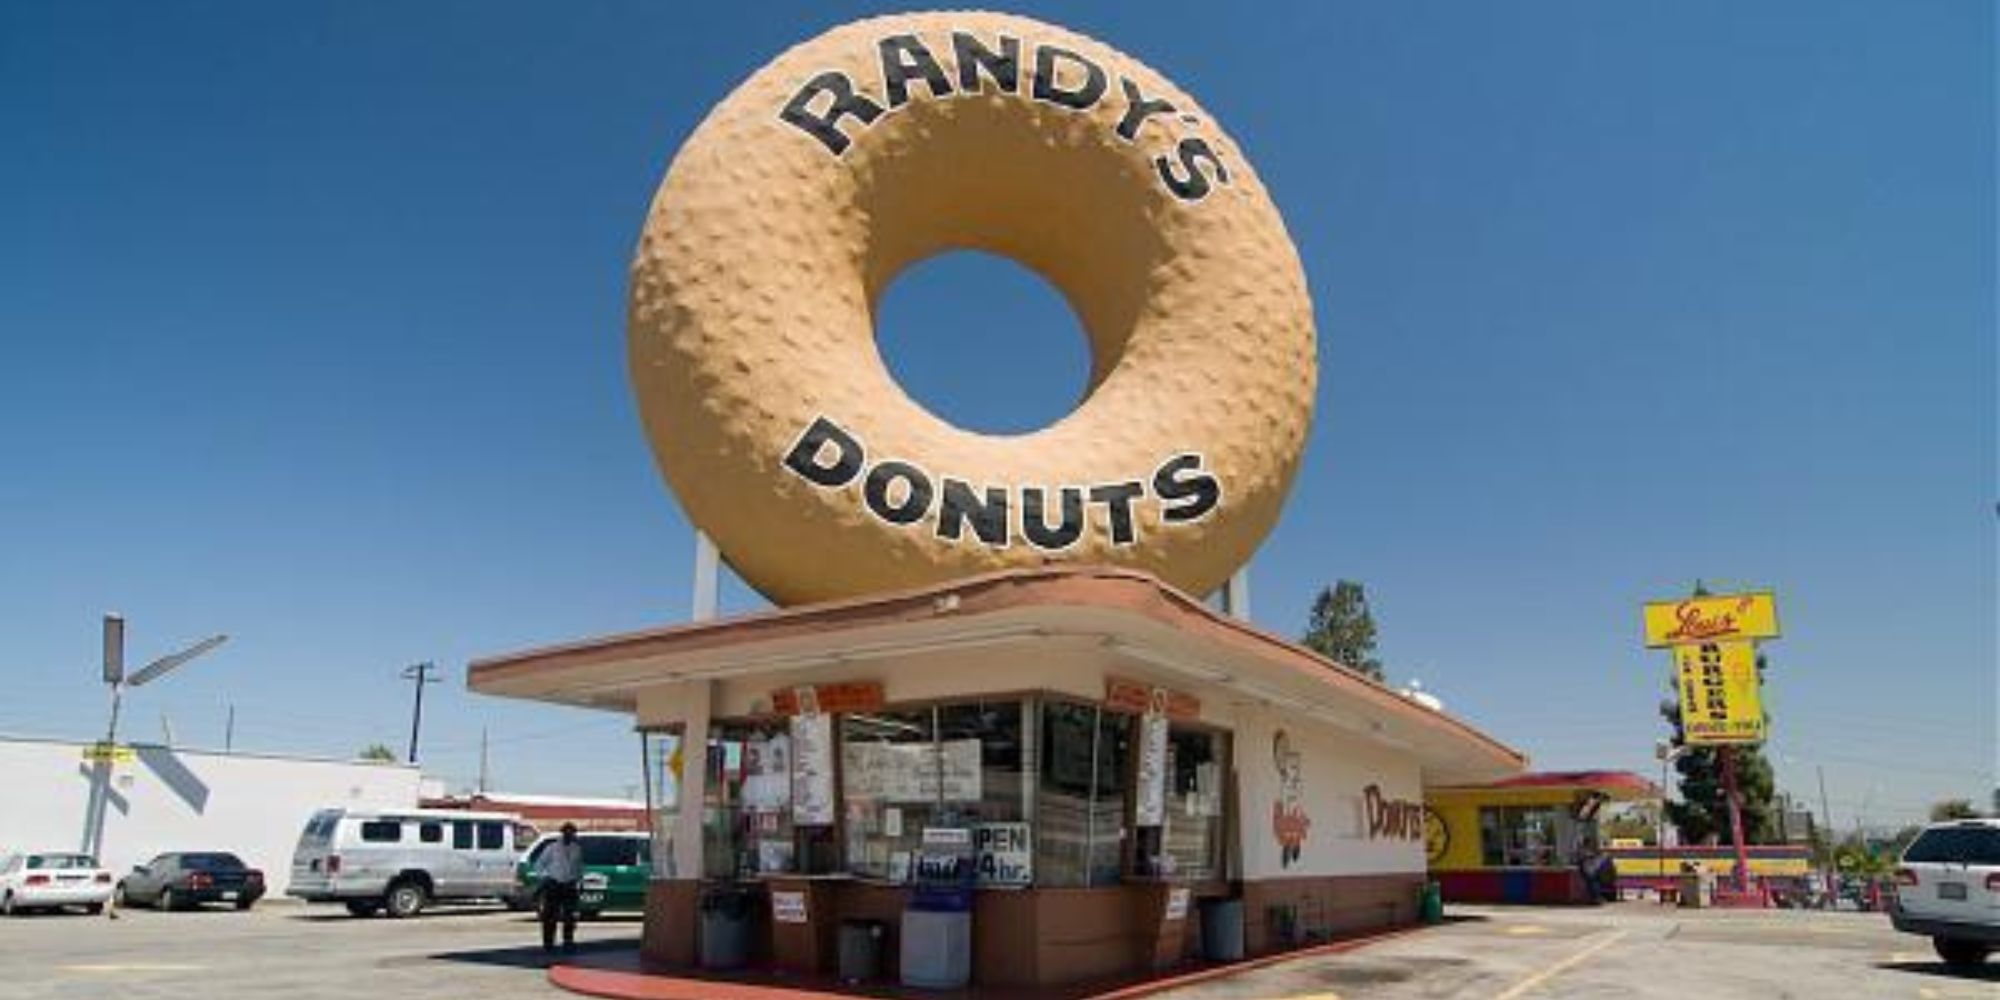 Randy’s Donuts in Los Angeles